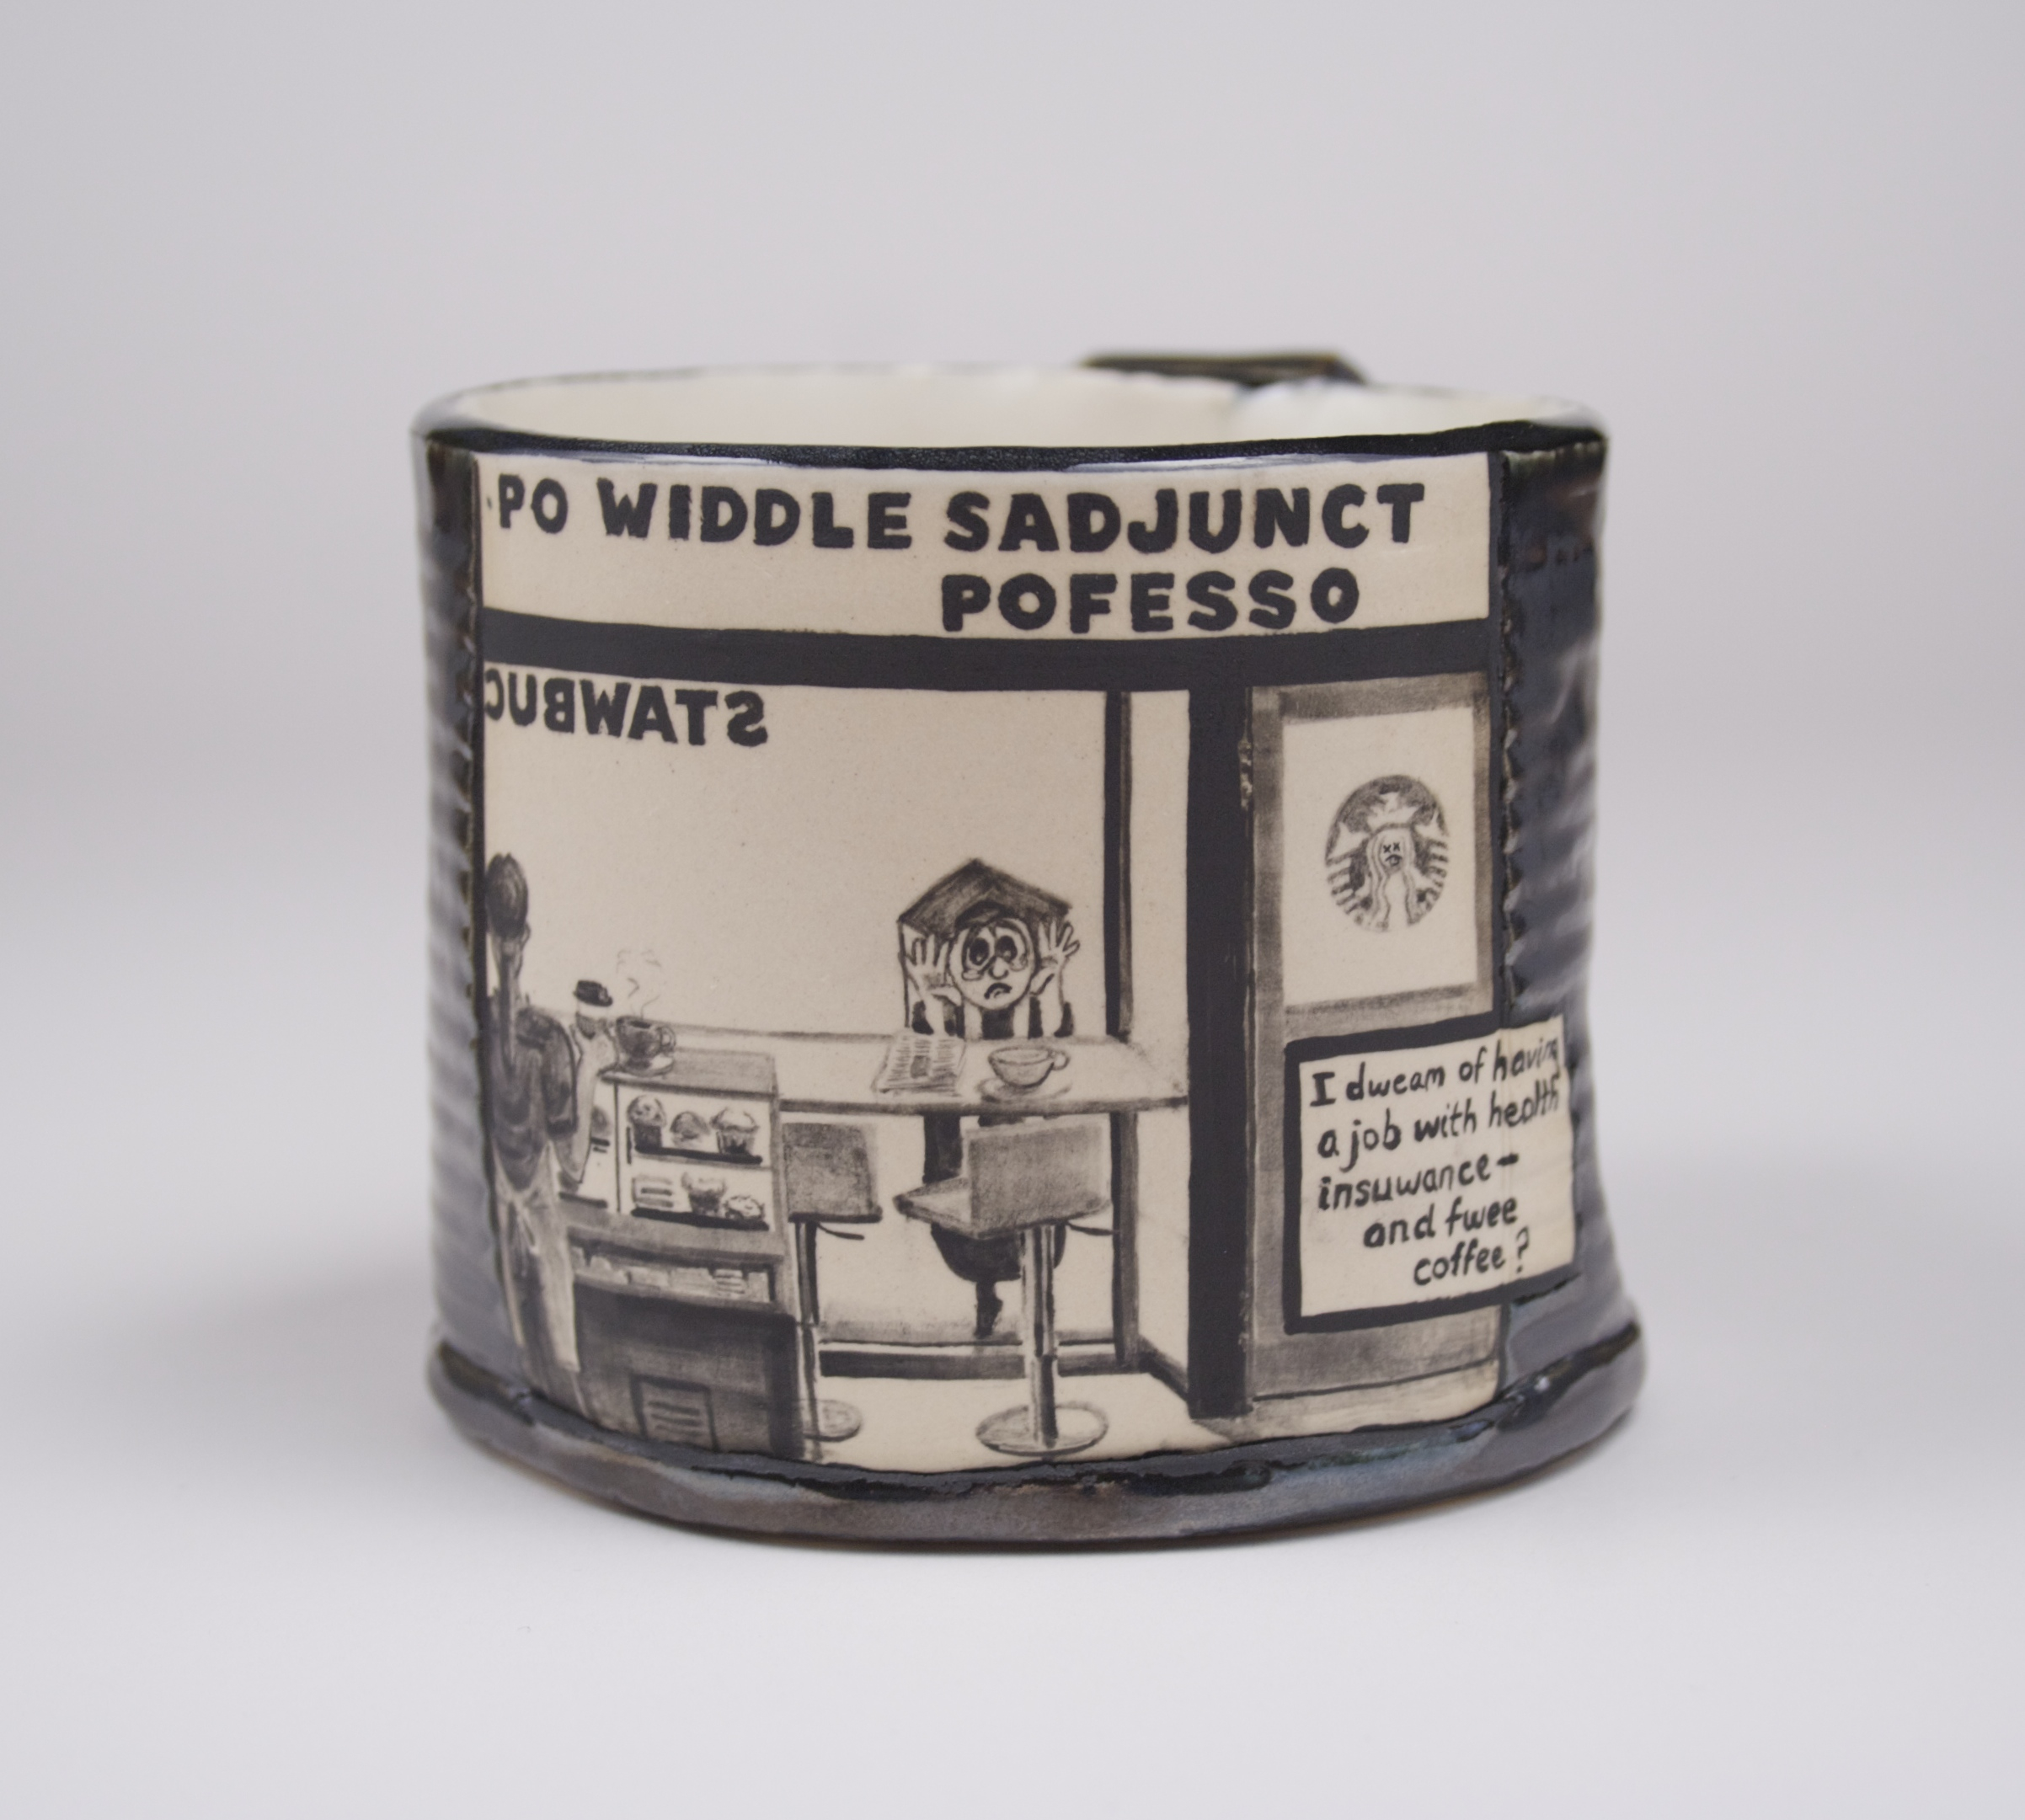   Po Widdle Sadjunct Pofesso: Stawbucks Dweamin'   approx 4.5 inches tall  glazed ceramic  2016 